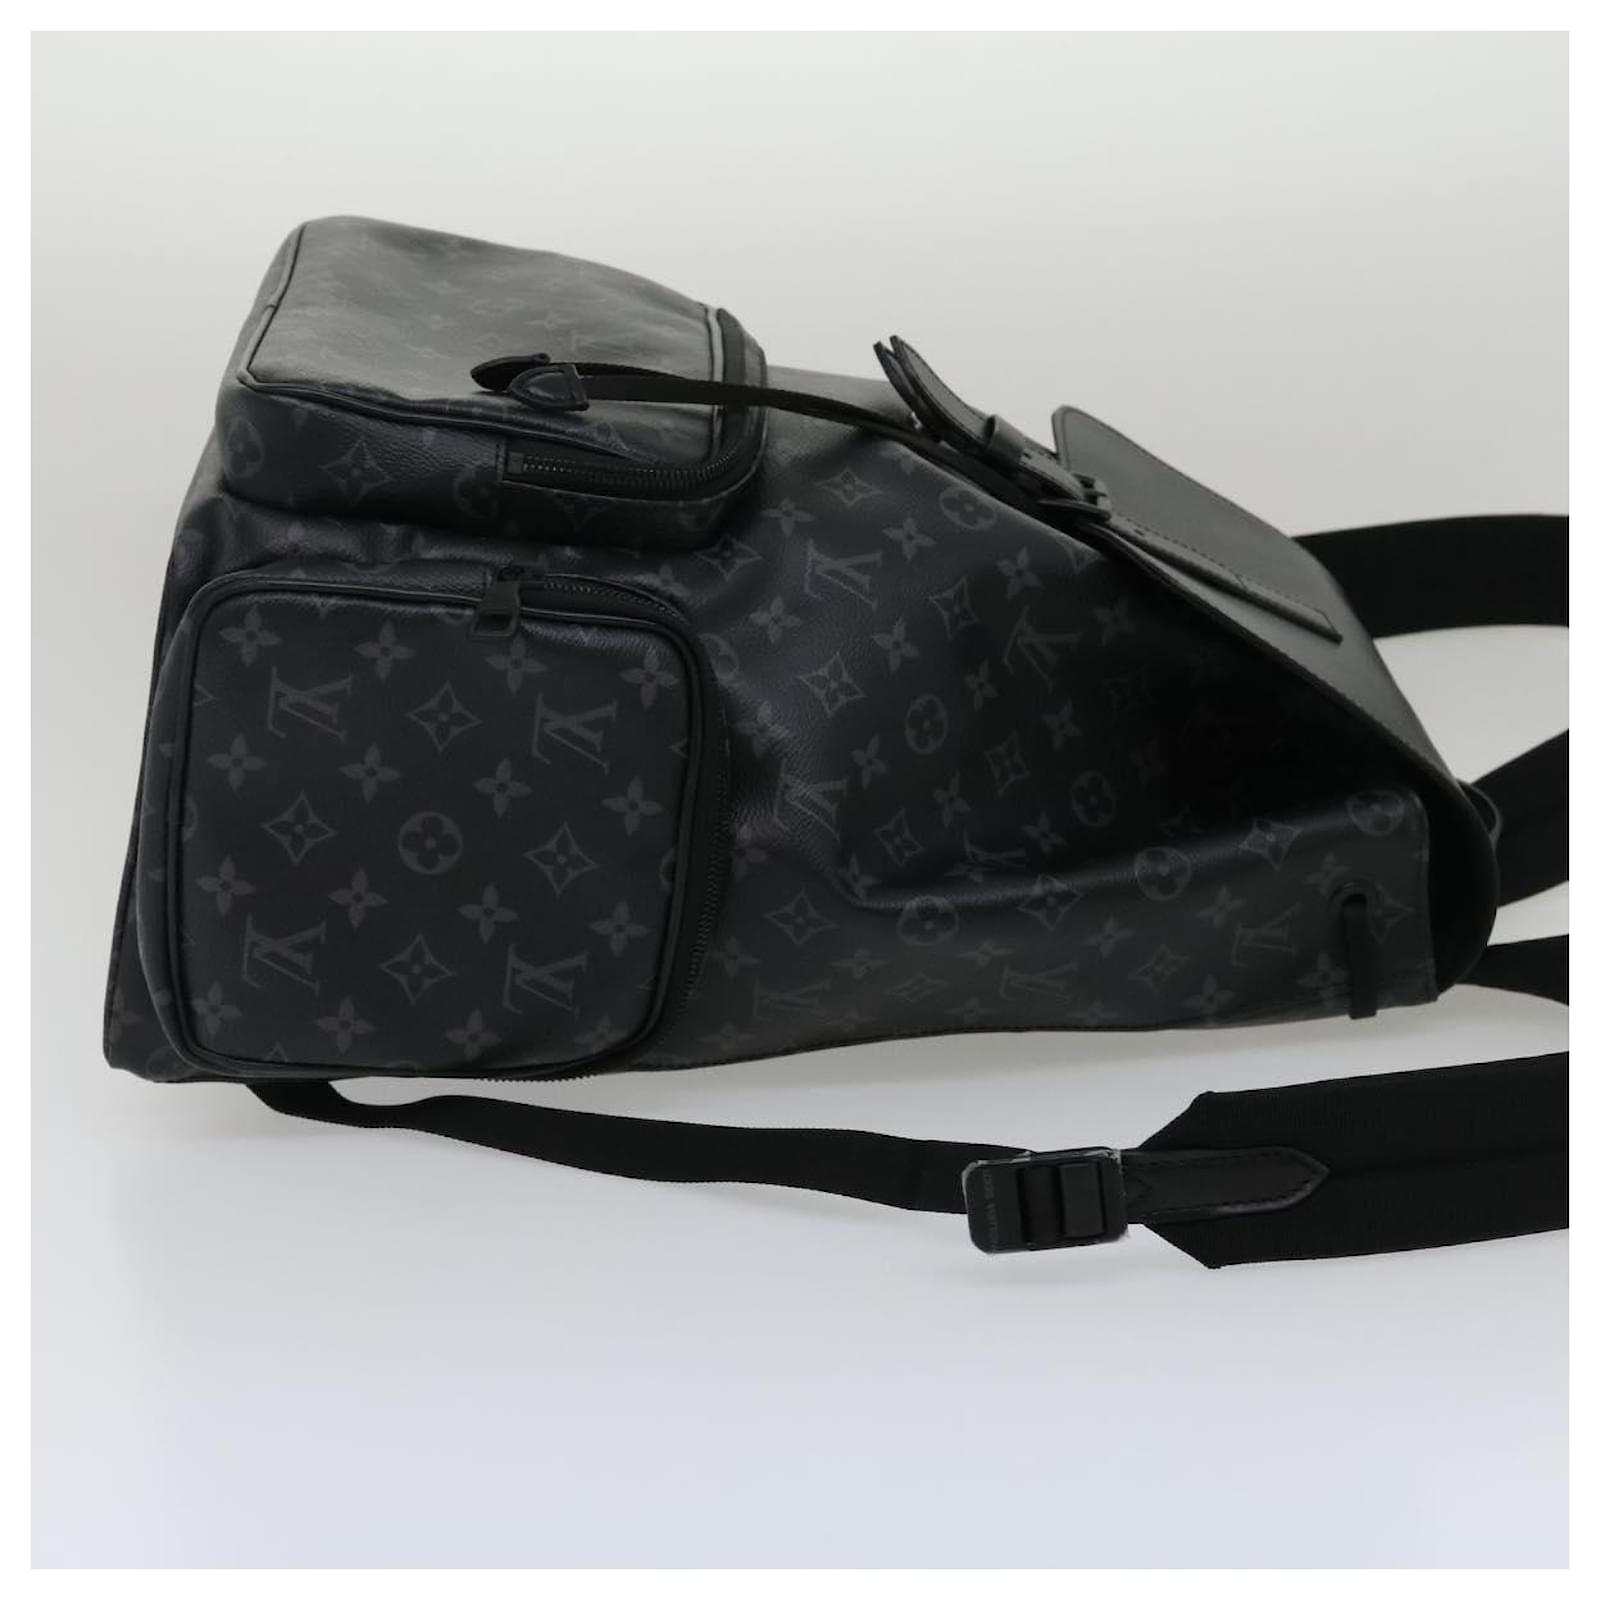 Shop Louis Vuitton MONOGRAM Backpack trio (M45538) by